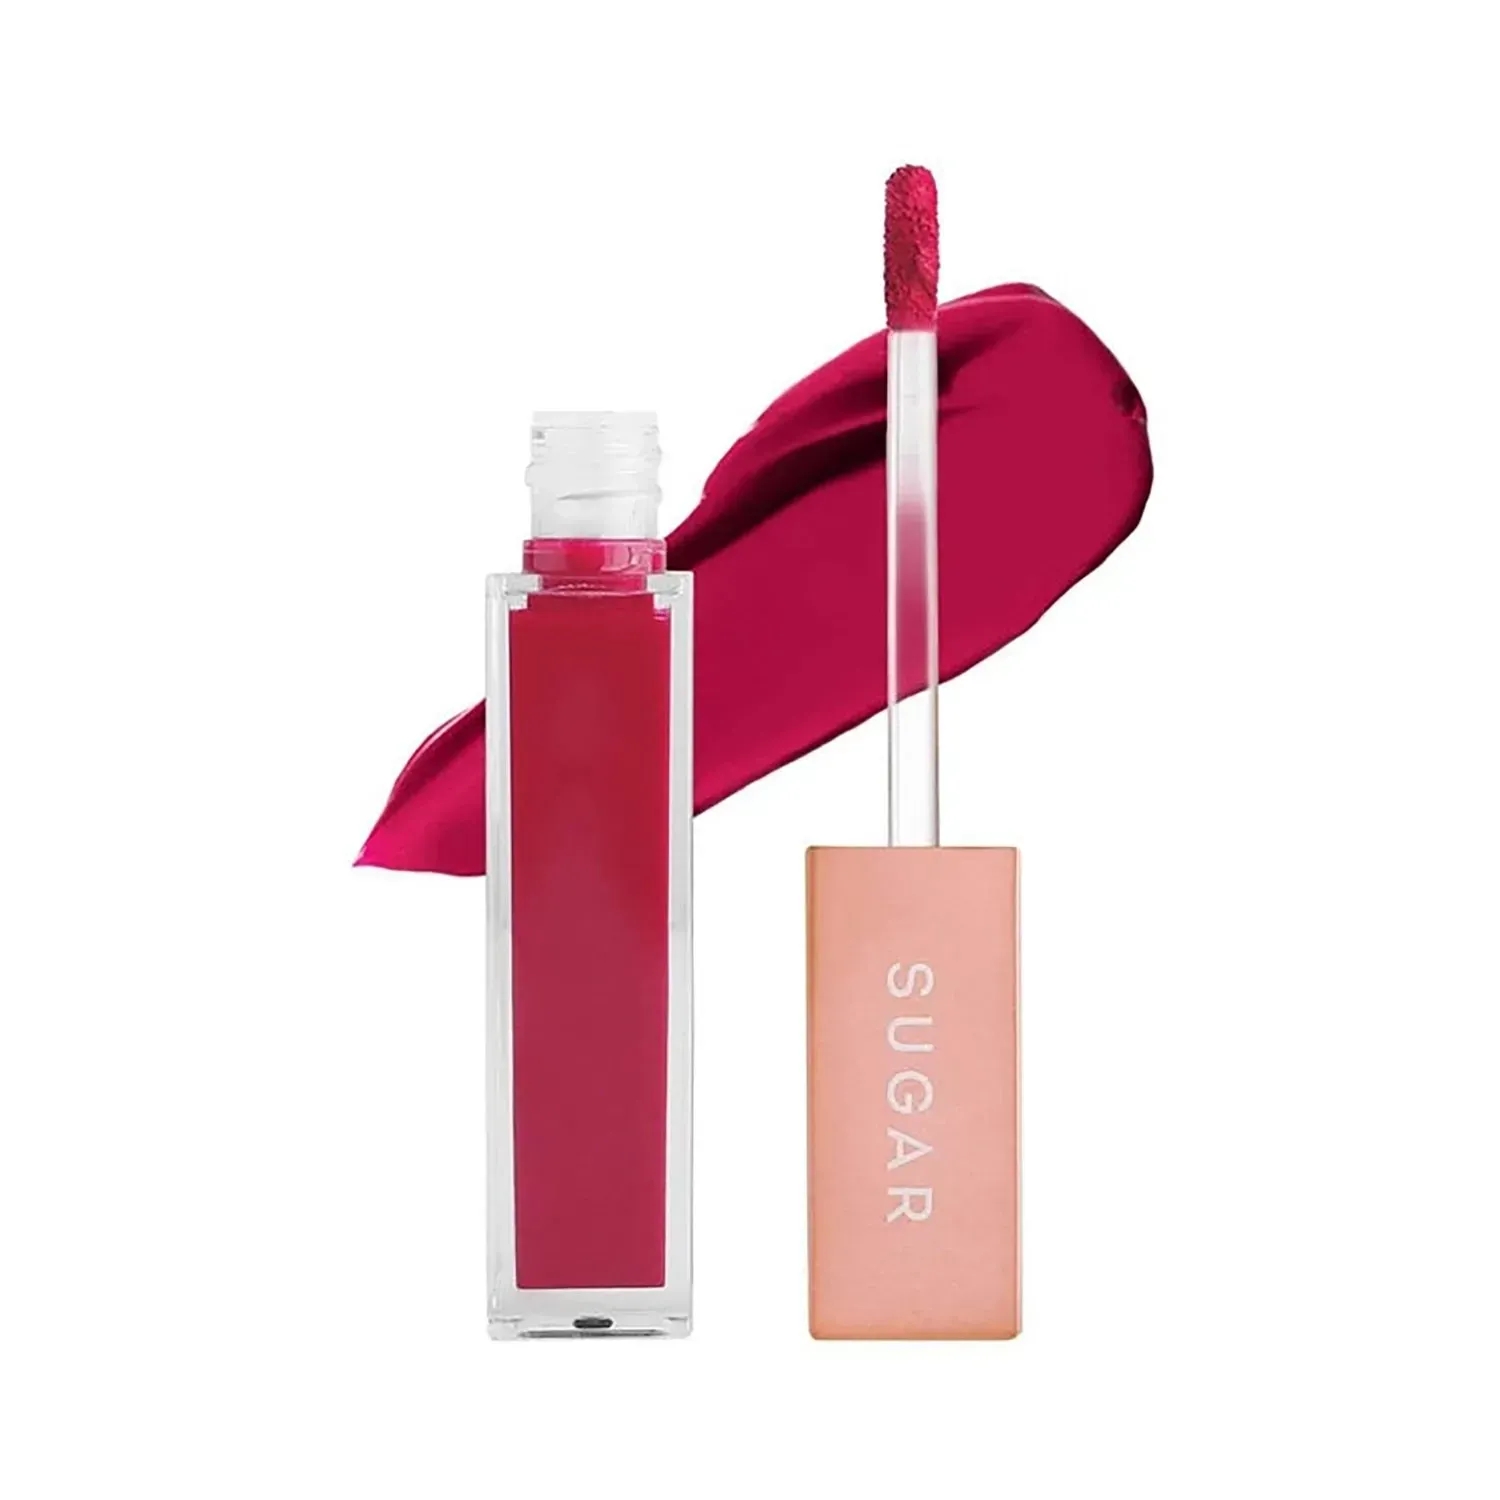 SUGAR Cosmetics | SUGAR Cosmetics Mettle Liquid Lipstick - 12 Talitha (Bright Magenta with Red Undertones) (7ml)